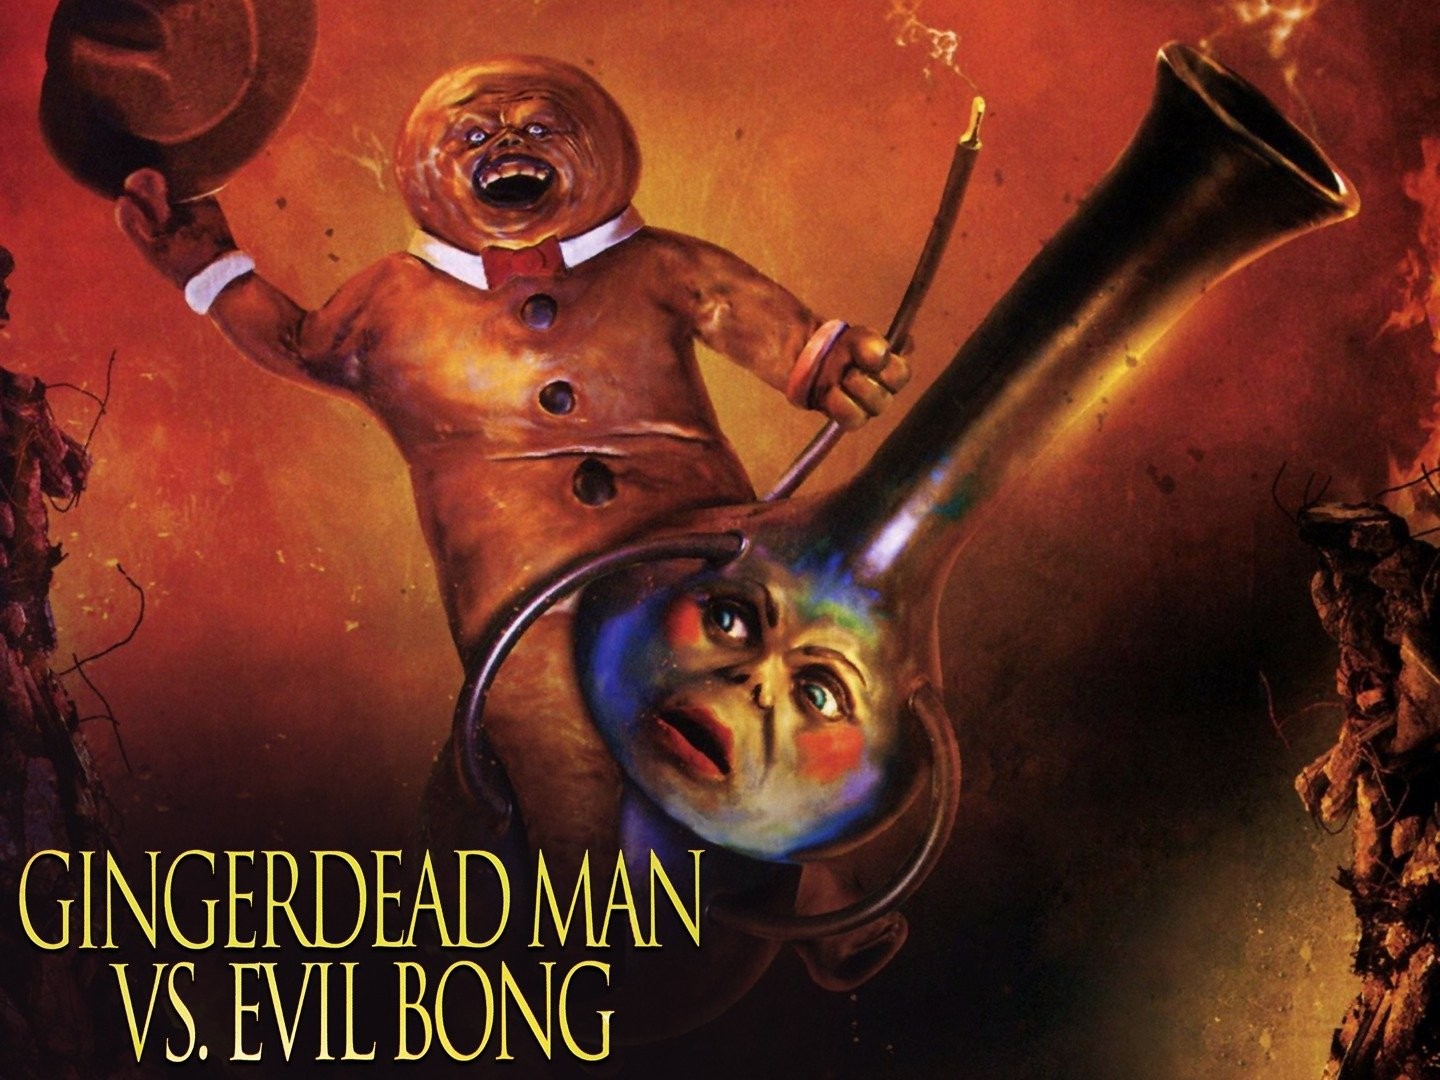 Gingerbread man vs evil bong